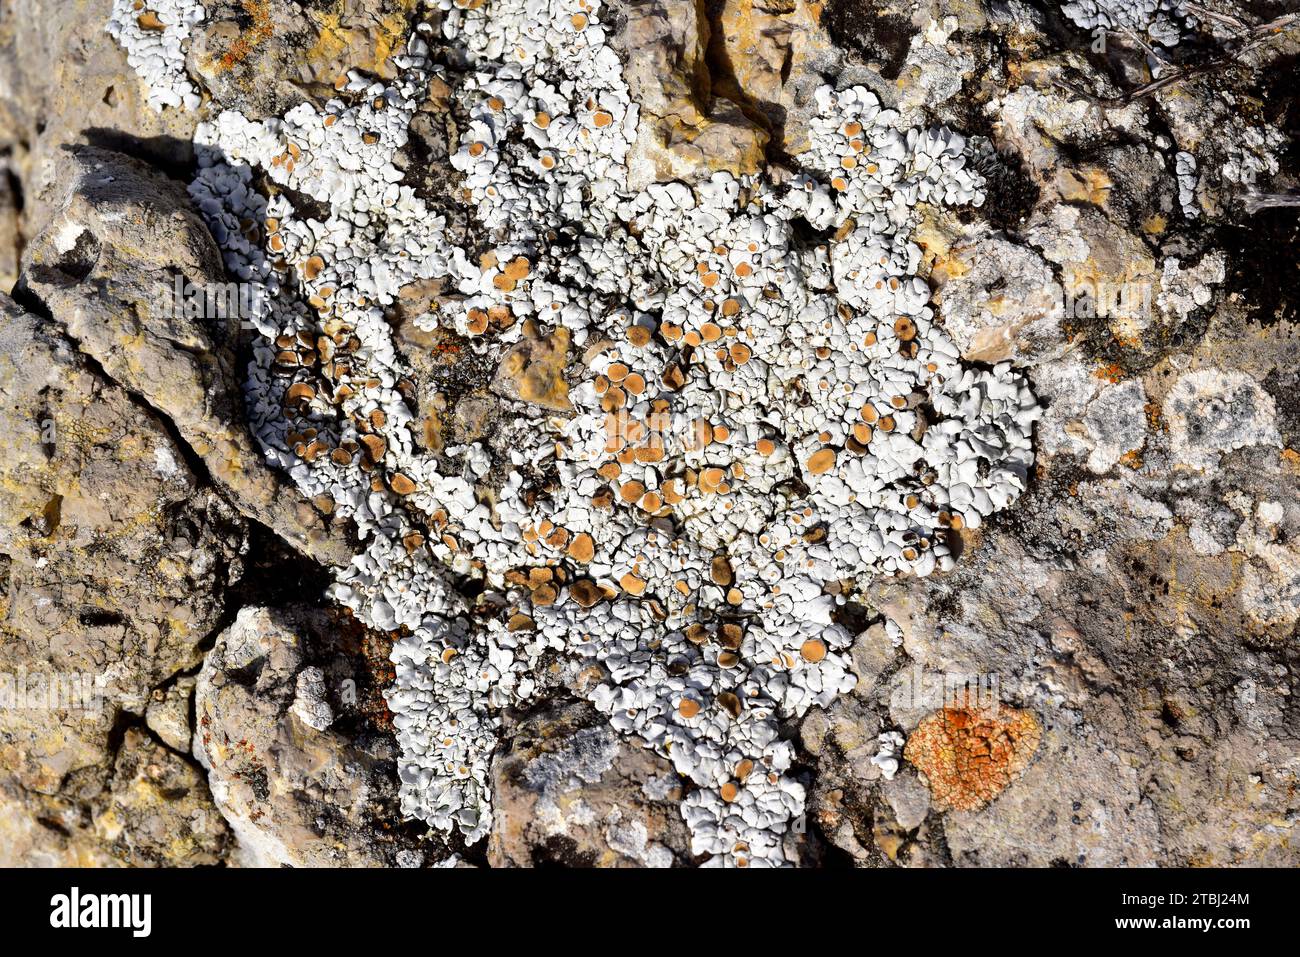 Squamarina lentigera is a squamulose lichen that grows on calcareous soil. This photo was taken near Aliaga, Teruel province, Aragon, Spain. Stock Photo